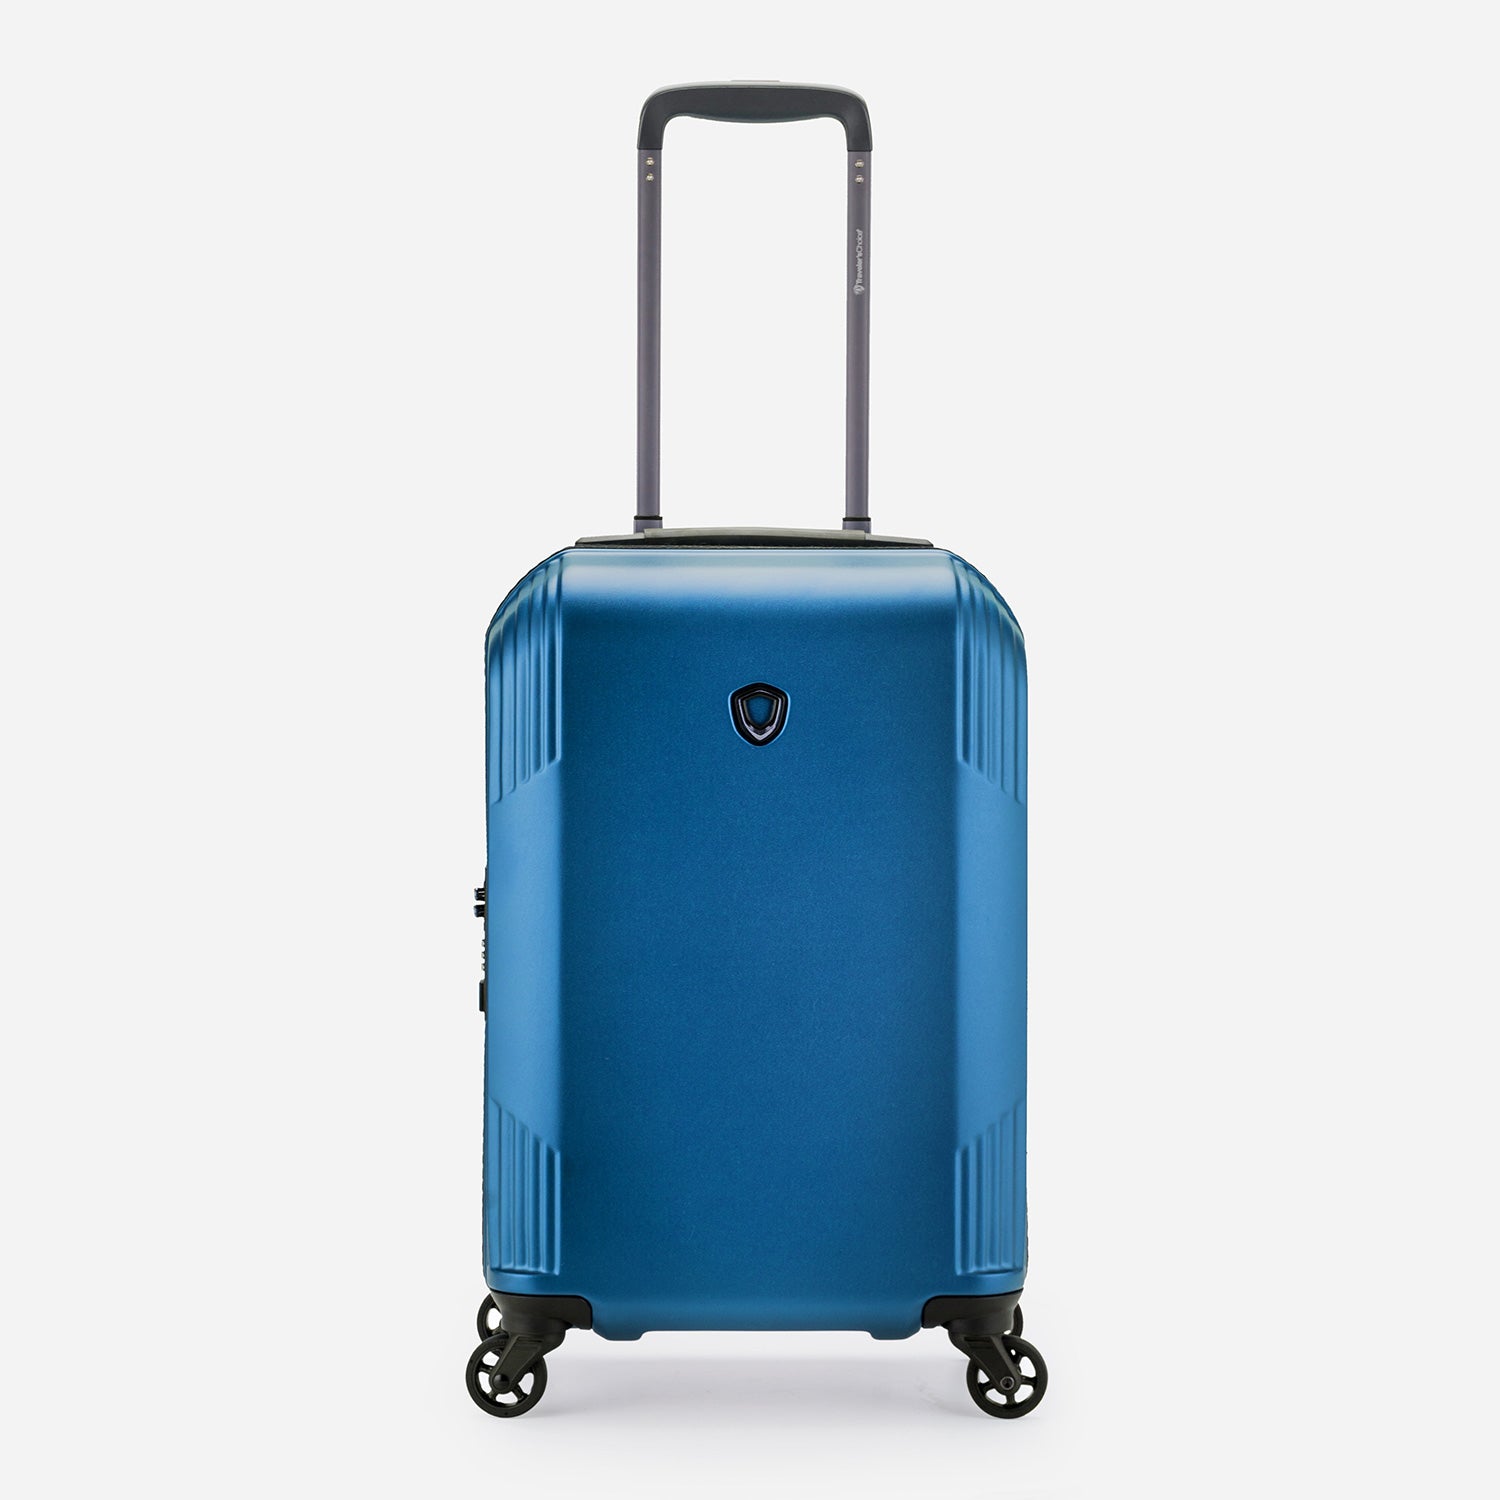 Riverside Carry-On 21 Hardside Spinner Luggage – Traveler's Choice